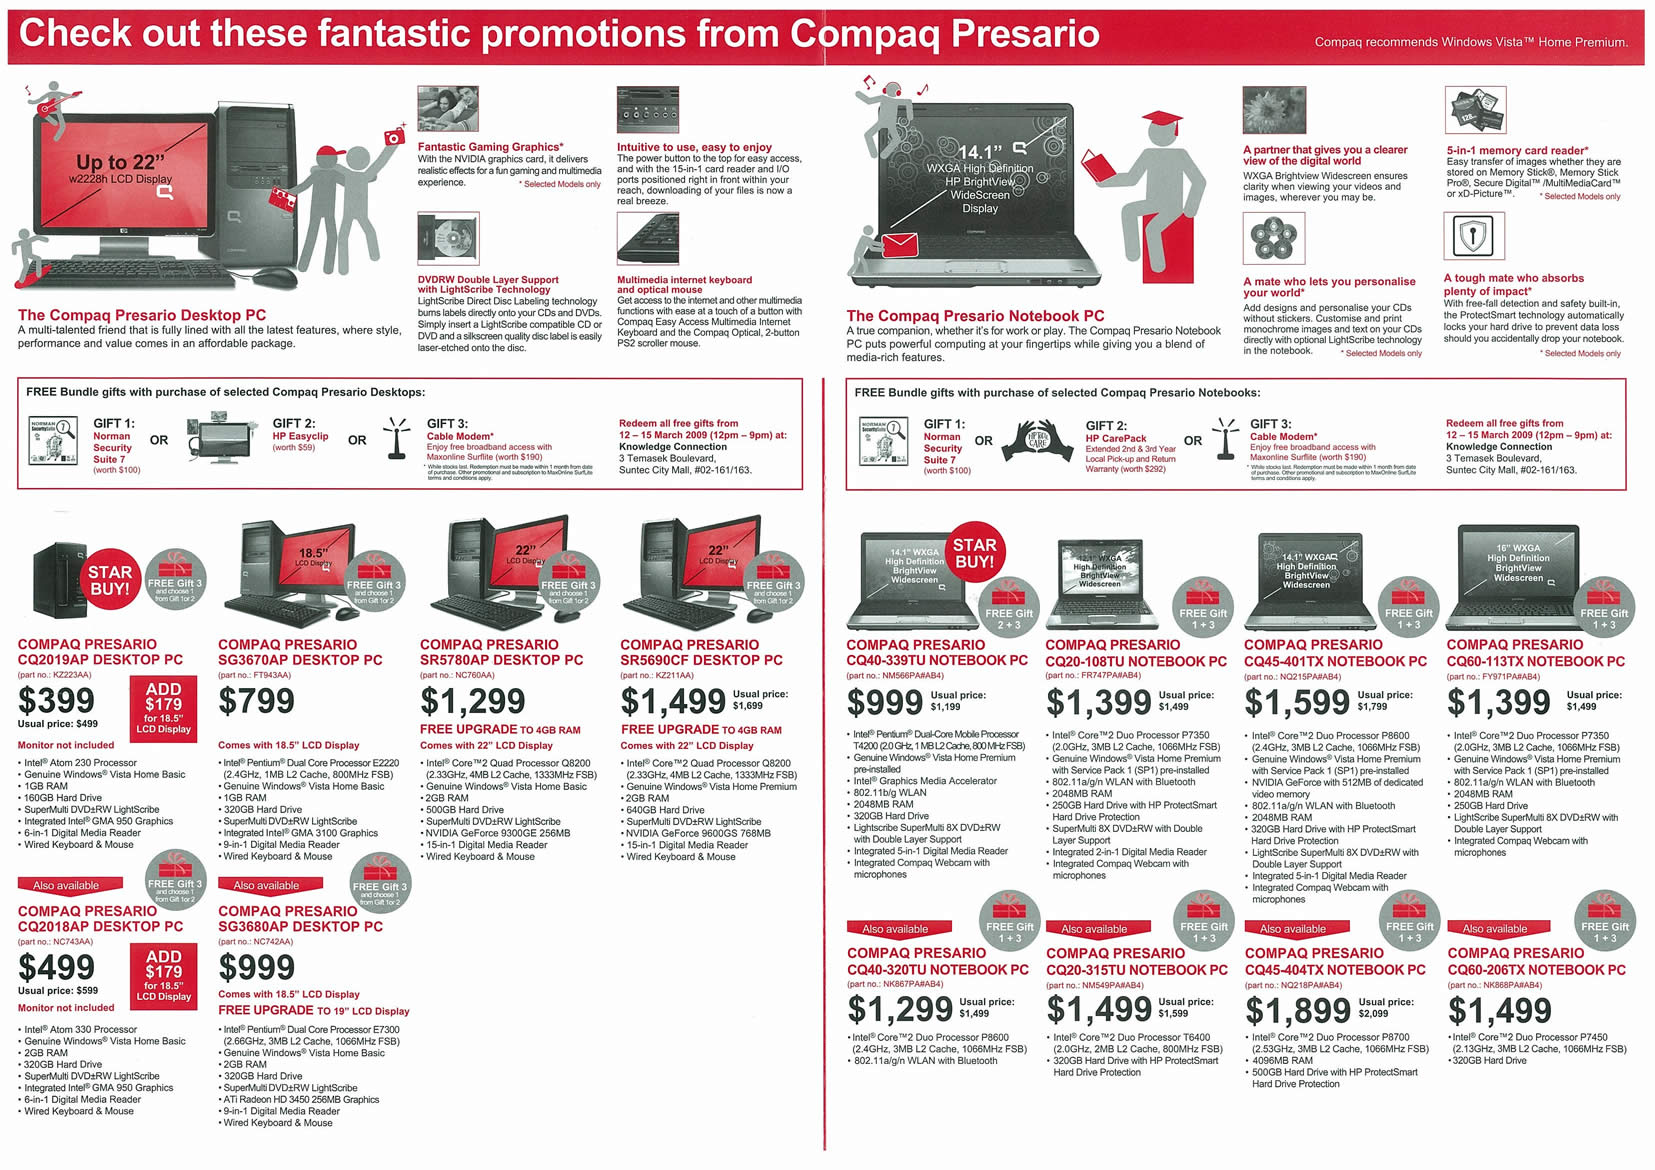 IT Show 2009 price list image brochure of Compaq Presario Desktop Notebook (tclong)